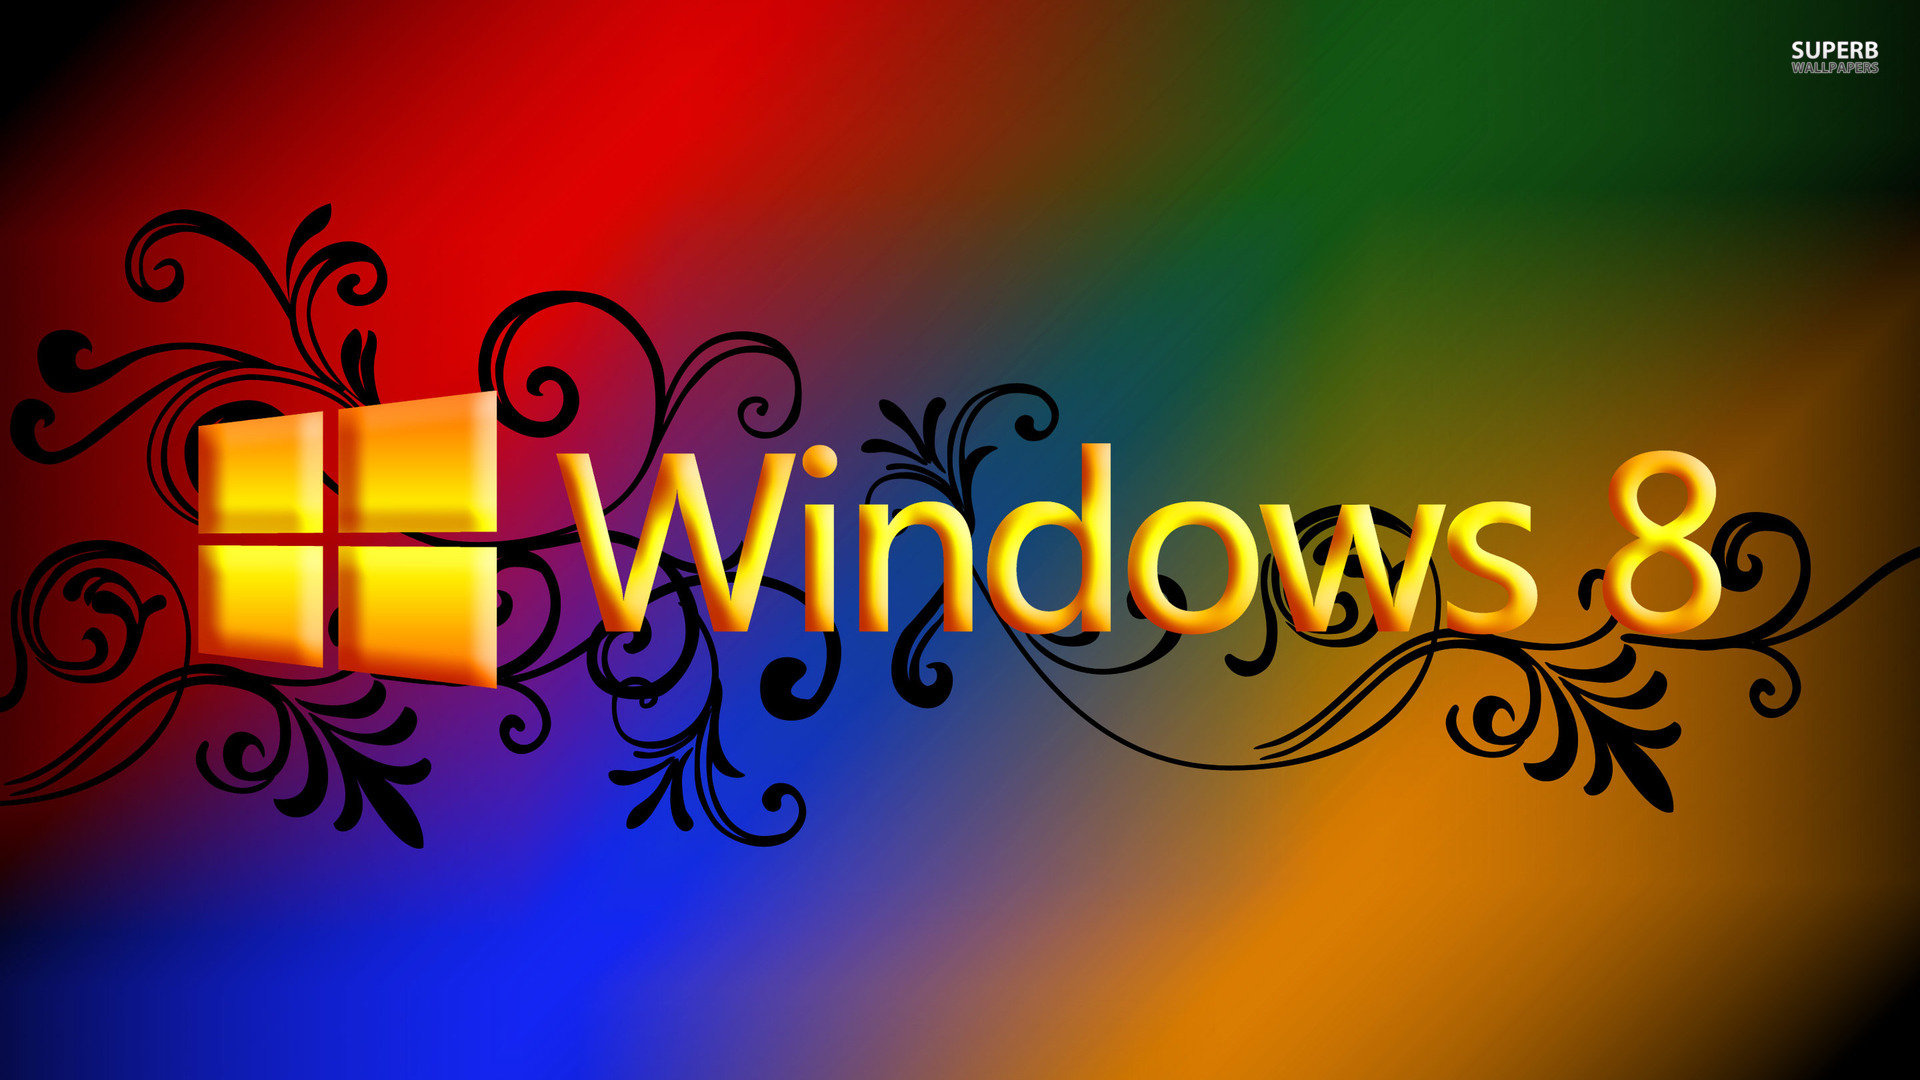 High resolution Windows 8 1080p background ID:78151 for desktop